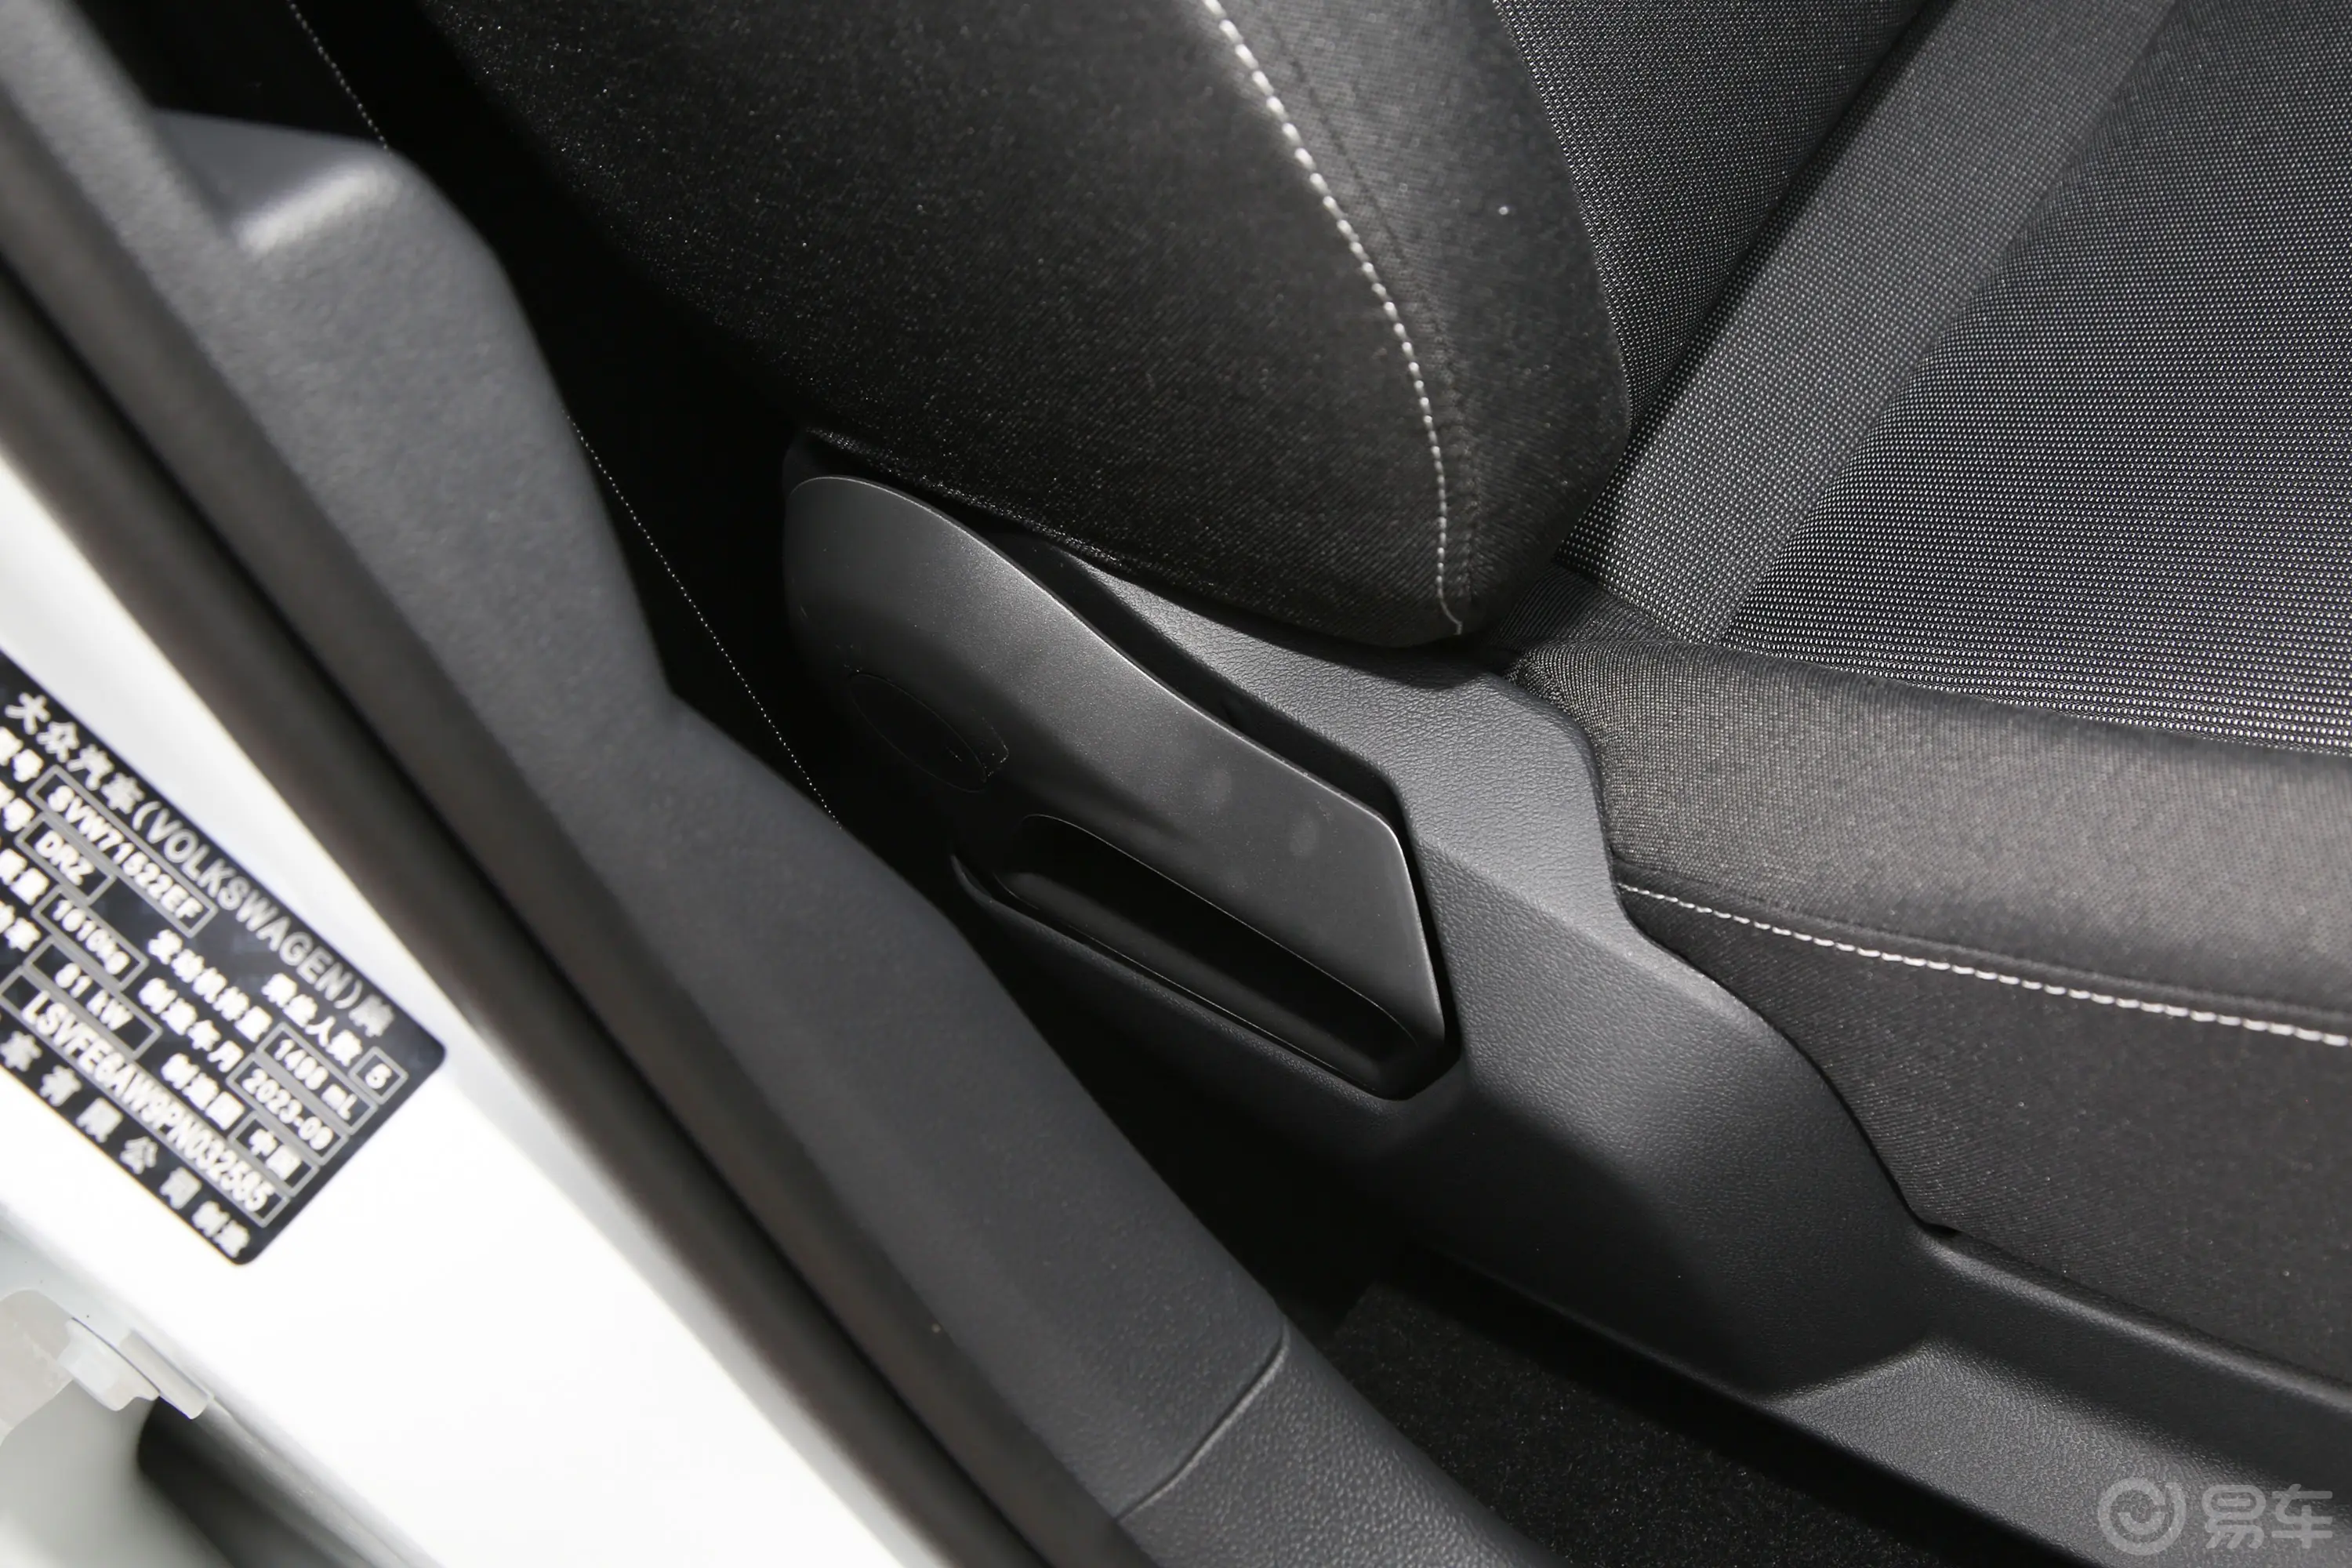 PoloPlus 1.5L 自动纵情乐活版副驾座椅调节